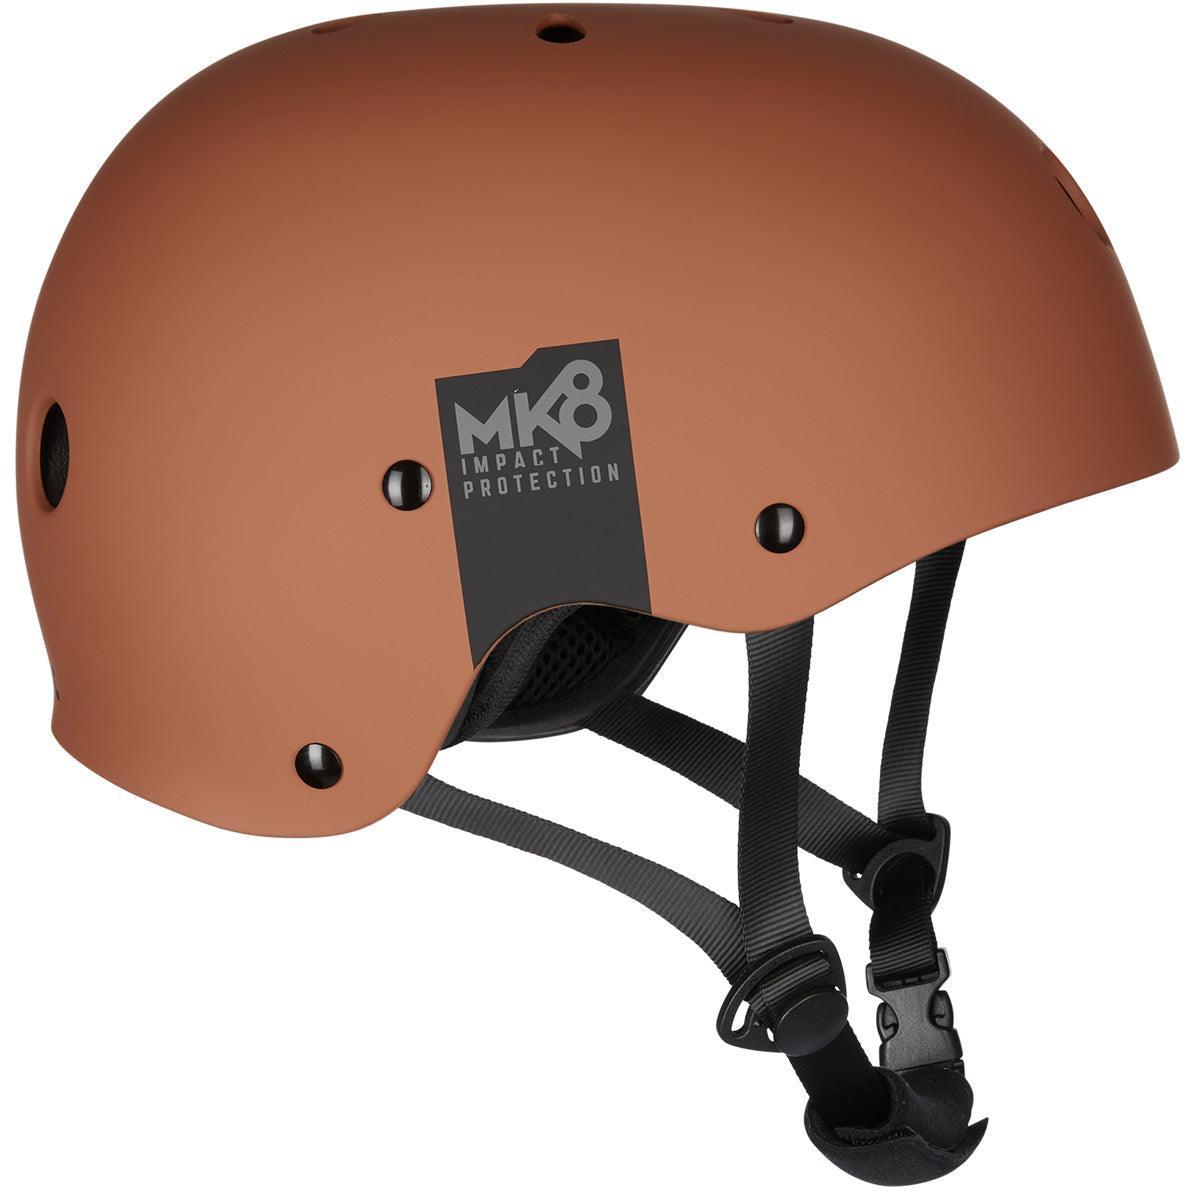 Mystic MK8 Helmet - Powerkiteshop